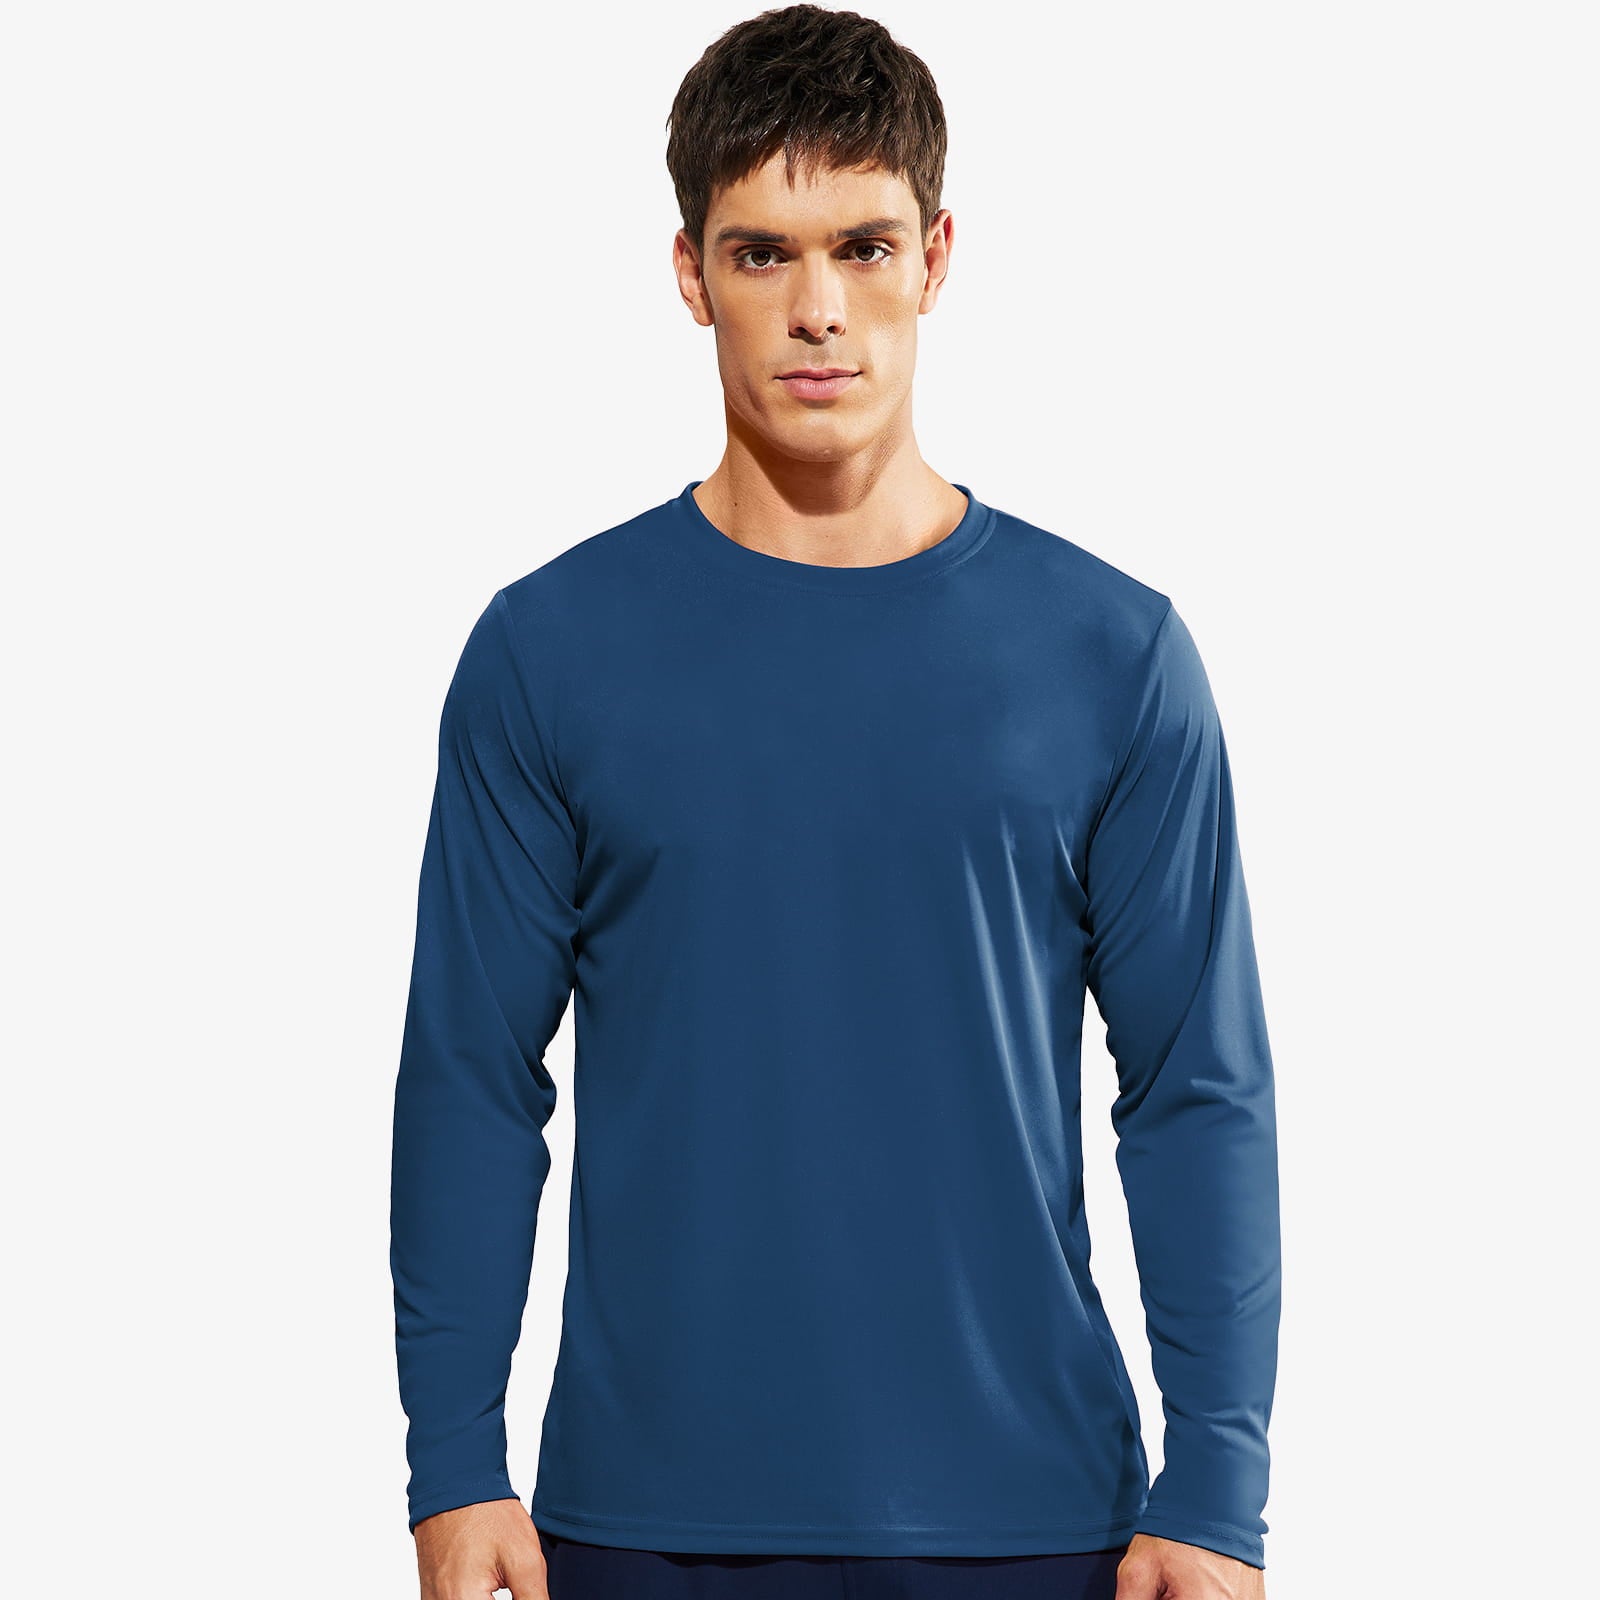 Haimont Men's UPF 50+ Long Sleeve Athletic T-shirts Quick Dry, Dark Blue / L